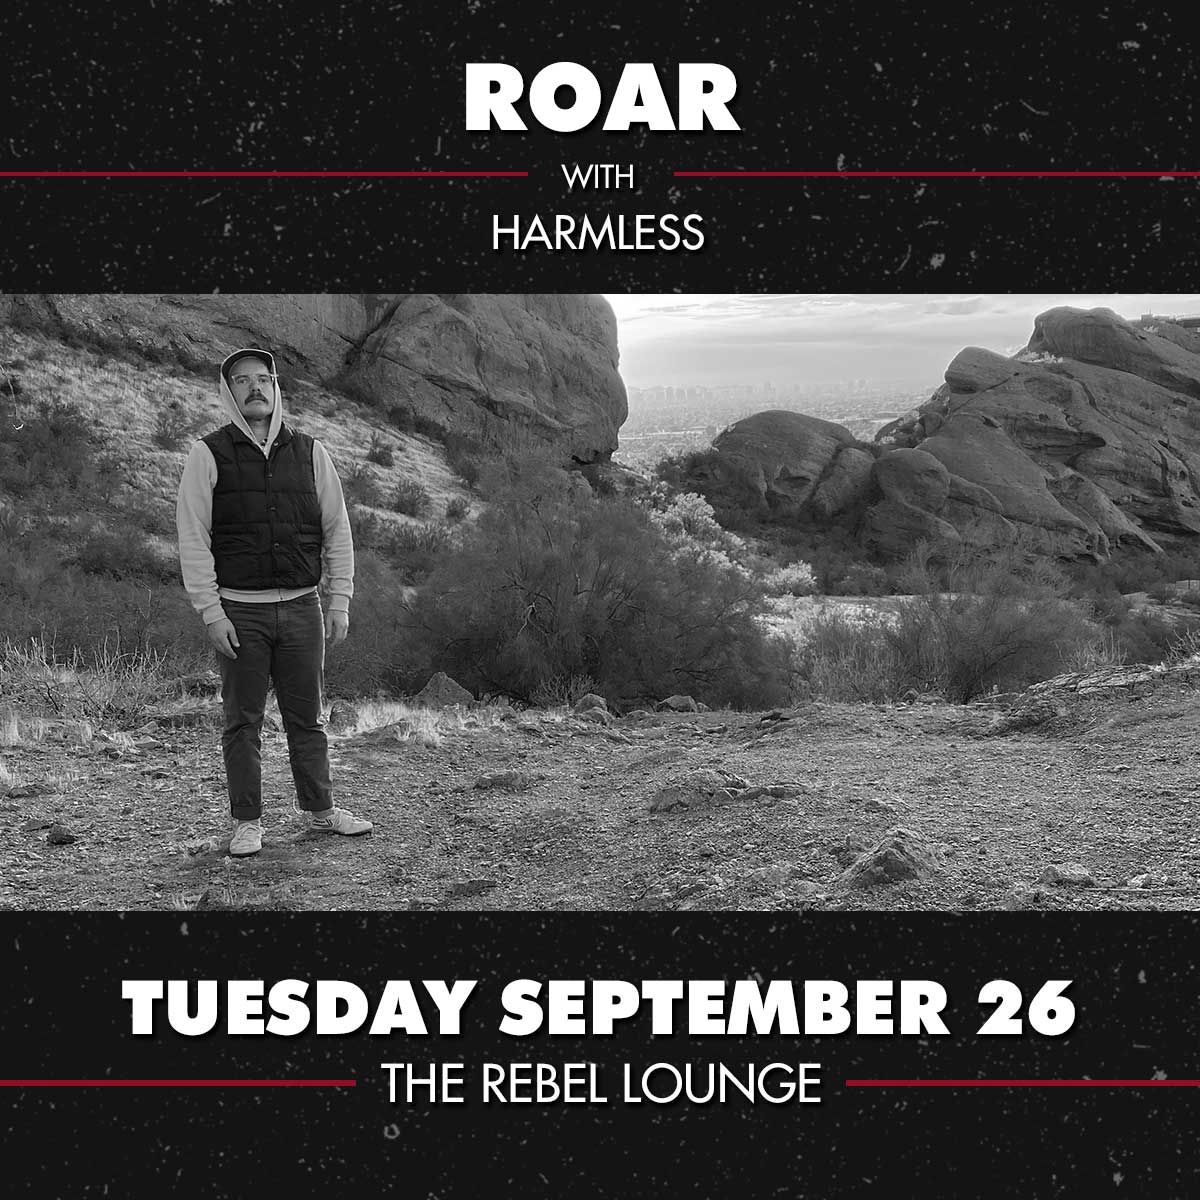 ROAR! at Rebel Lounge